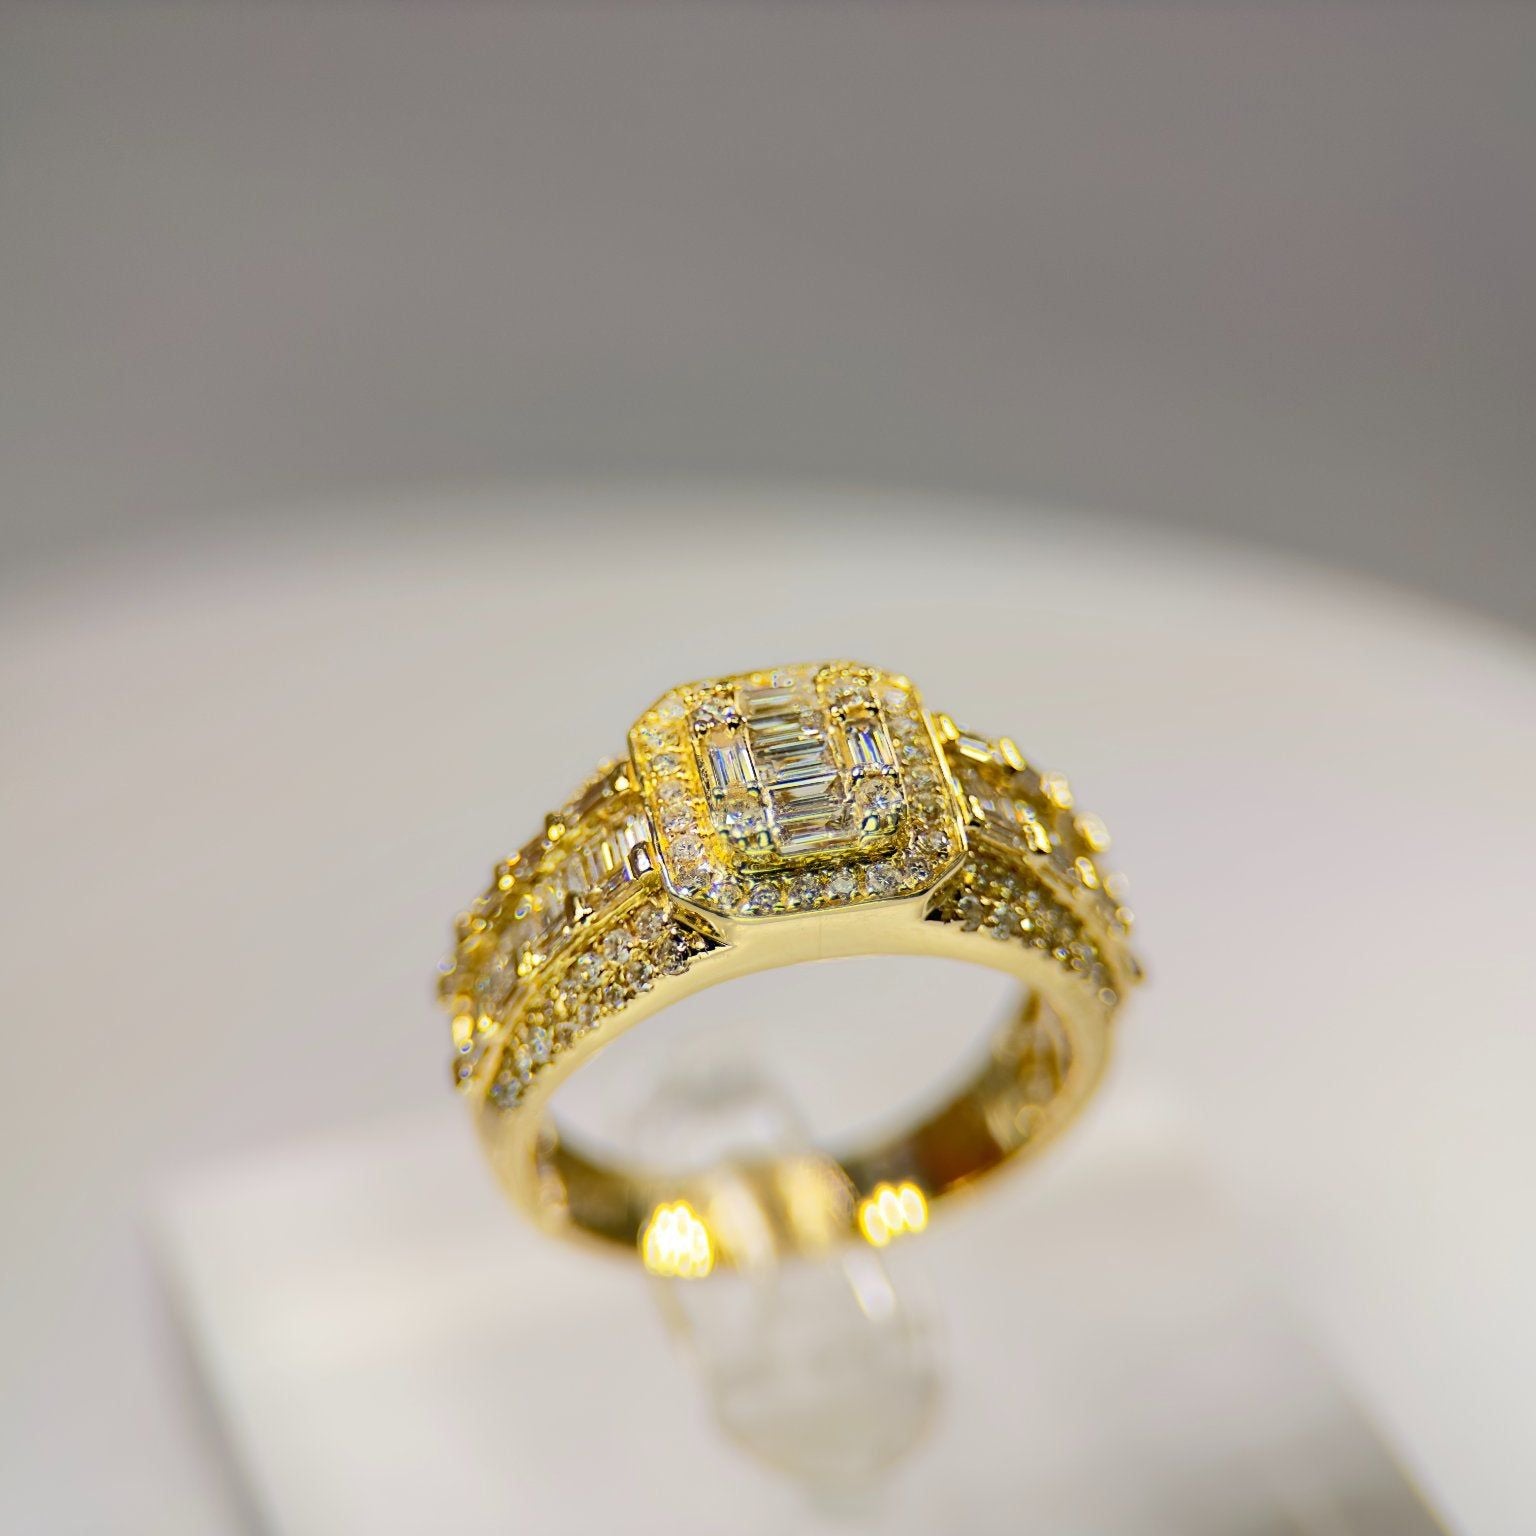 DR1206 - 14K Yellow Gold - Cushion - Diamond - Men's Diamond Rings